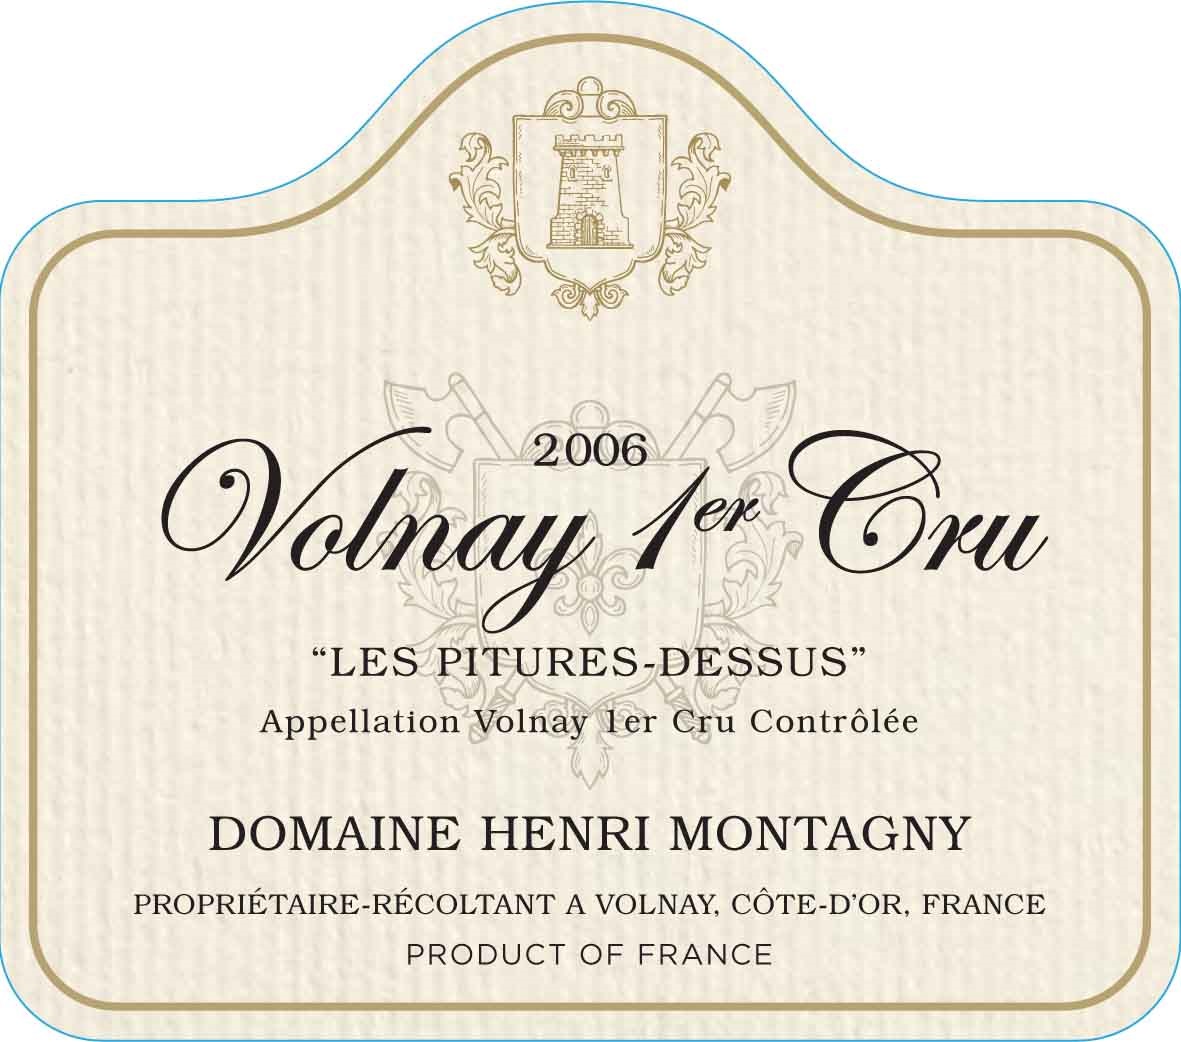 Domaine Henri Montagny Volnay 1er Cru - Les Pitures-Dessus label